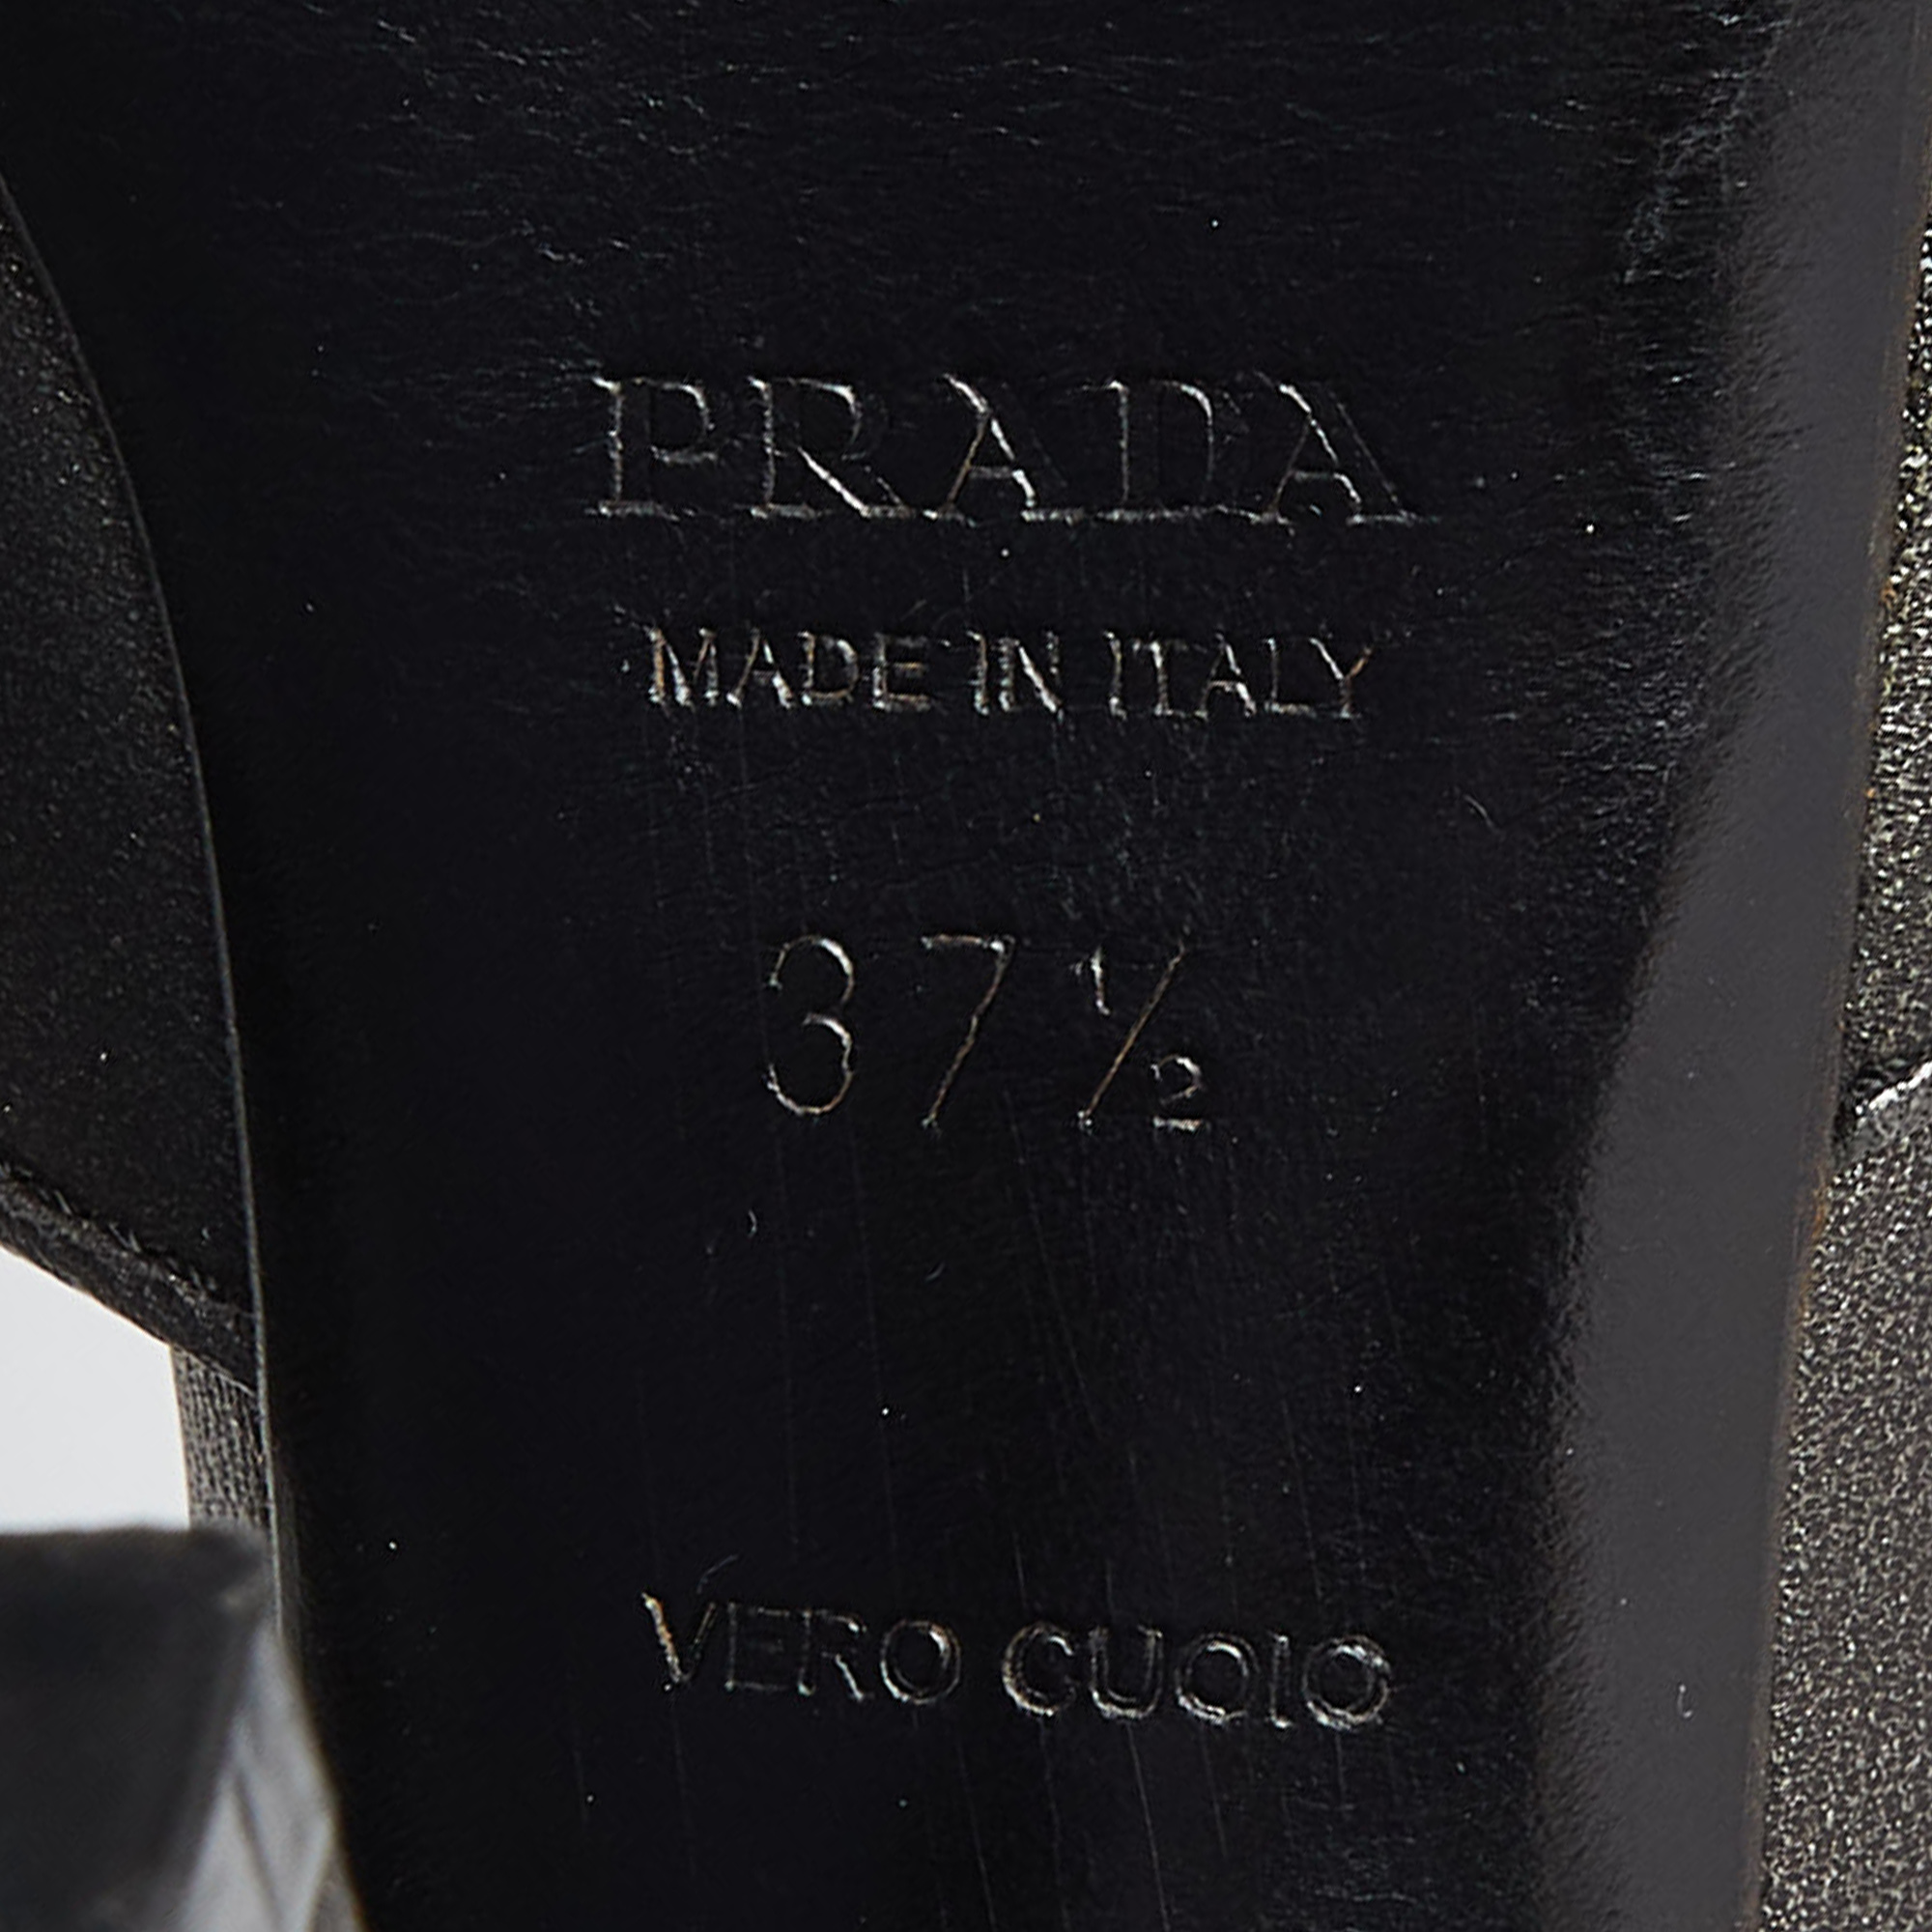 Prada Metallic Dark Grey Leather Ankle Strap Platform Sandals Size 37.5